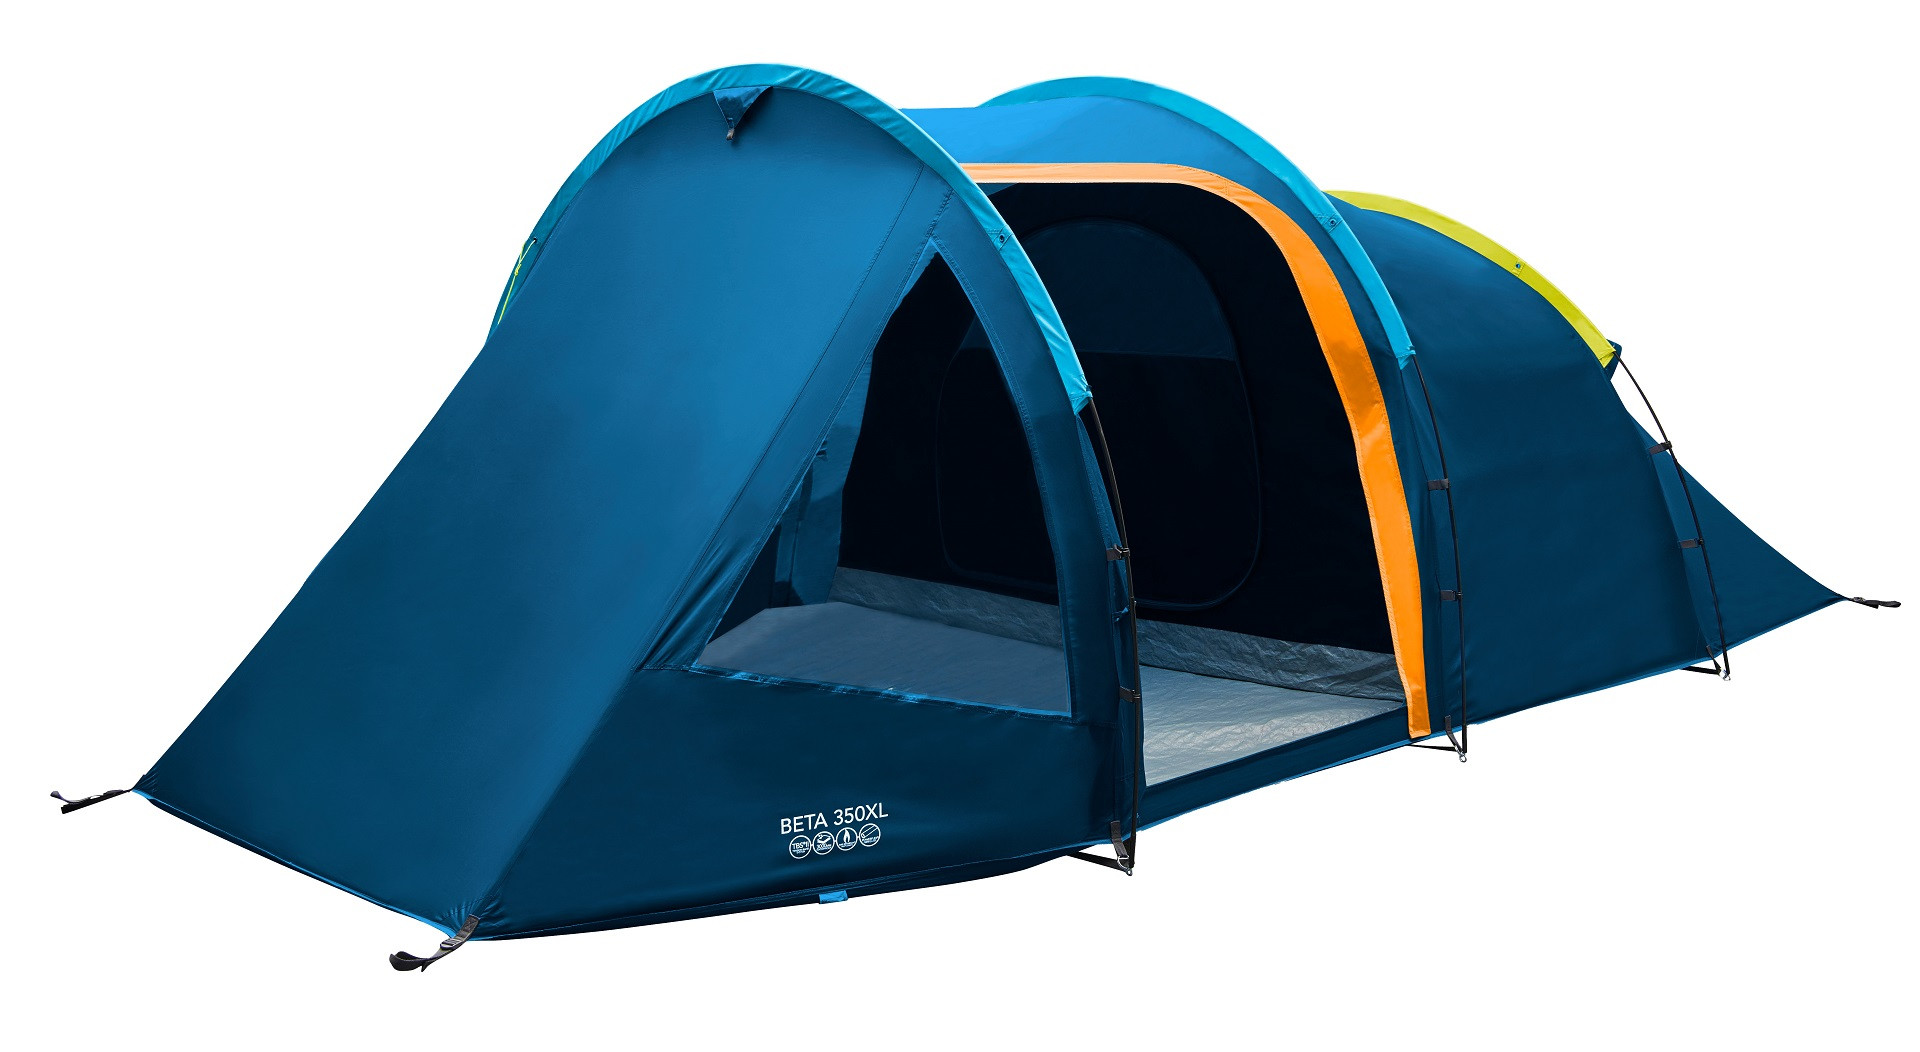 Vango Adventure Beta 350XL Tent